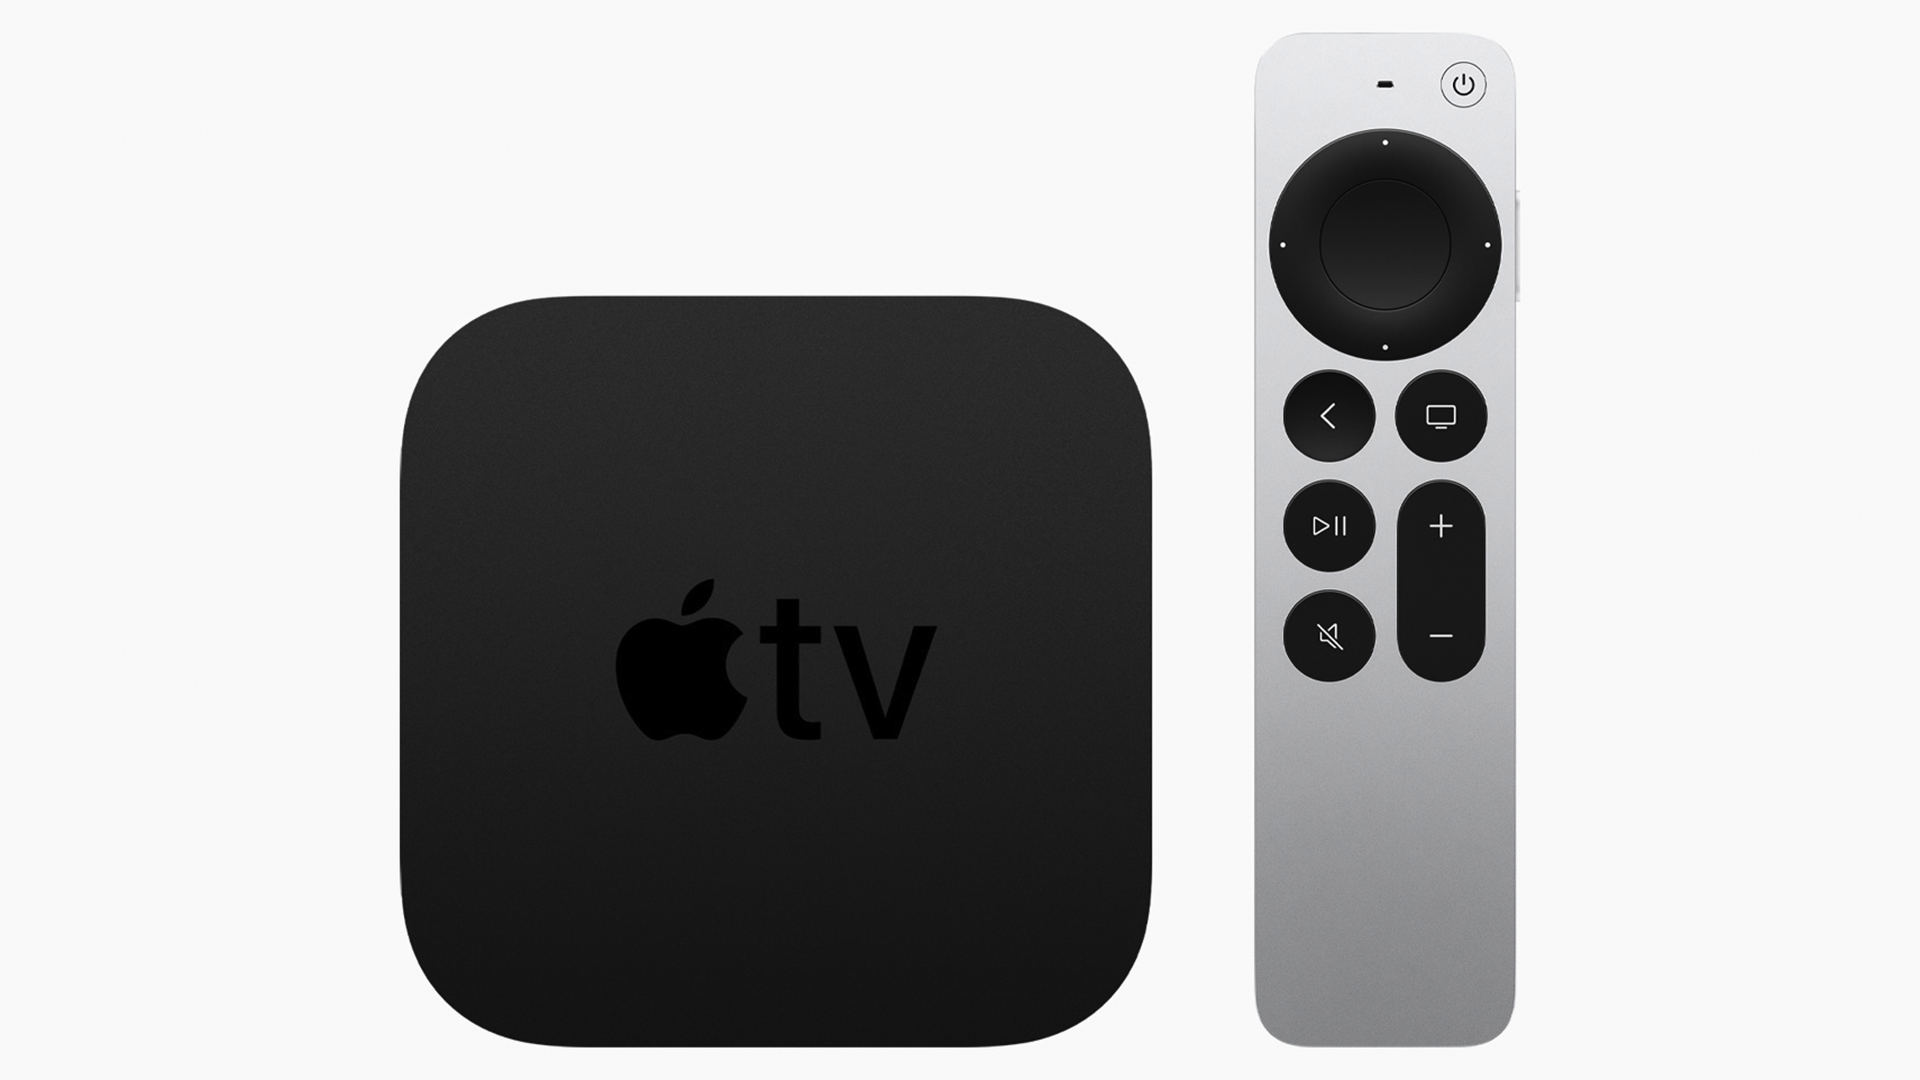 The Apple TV 4k streaming box.